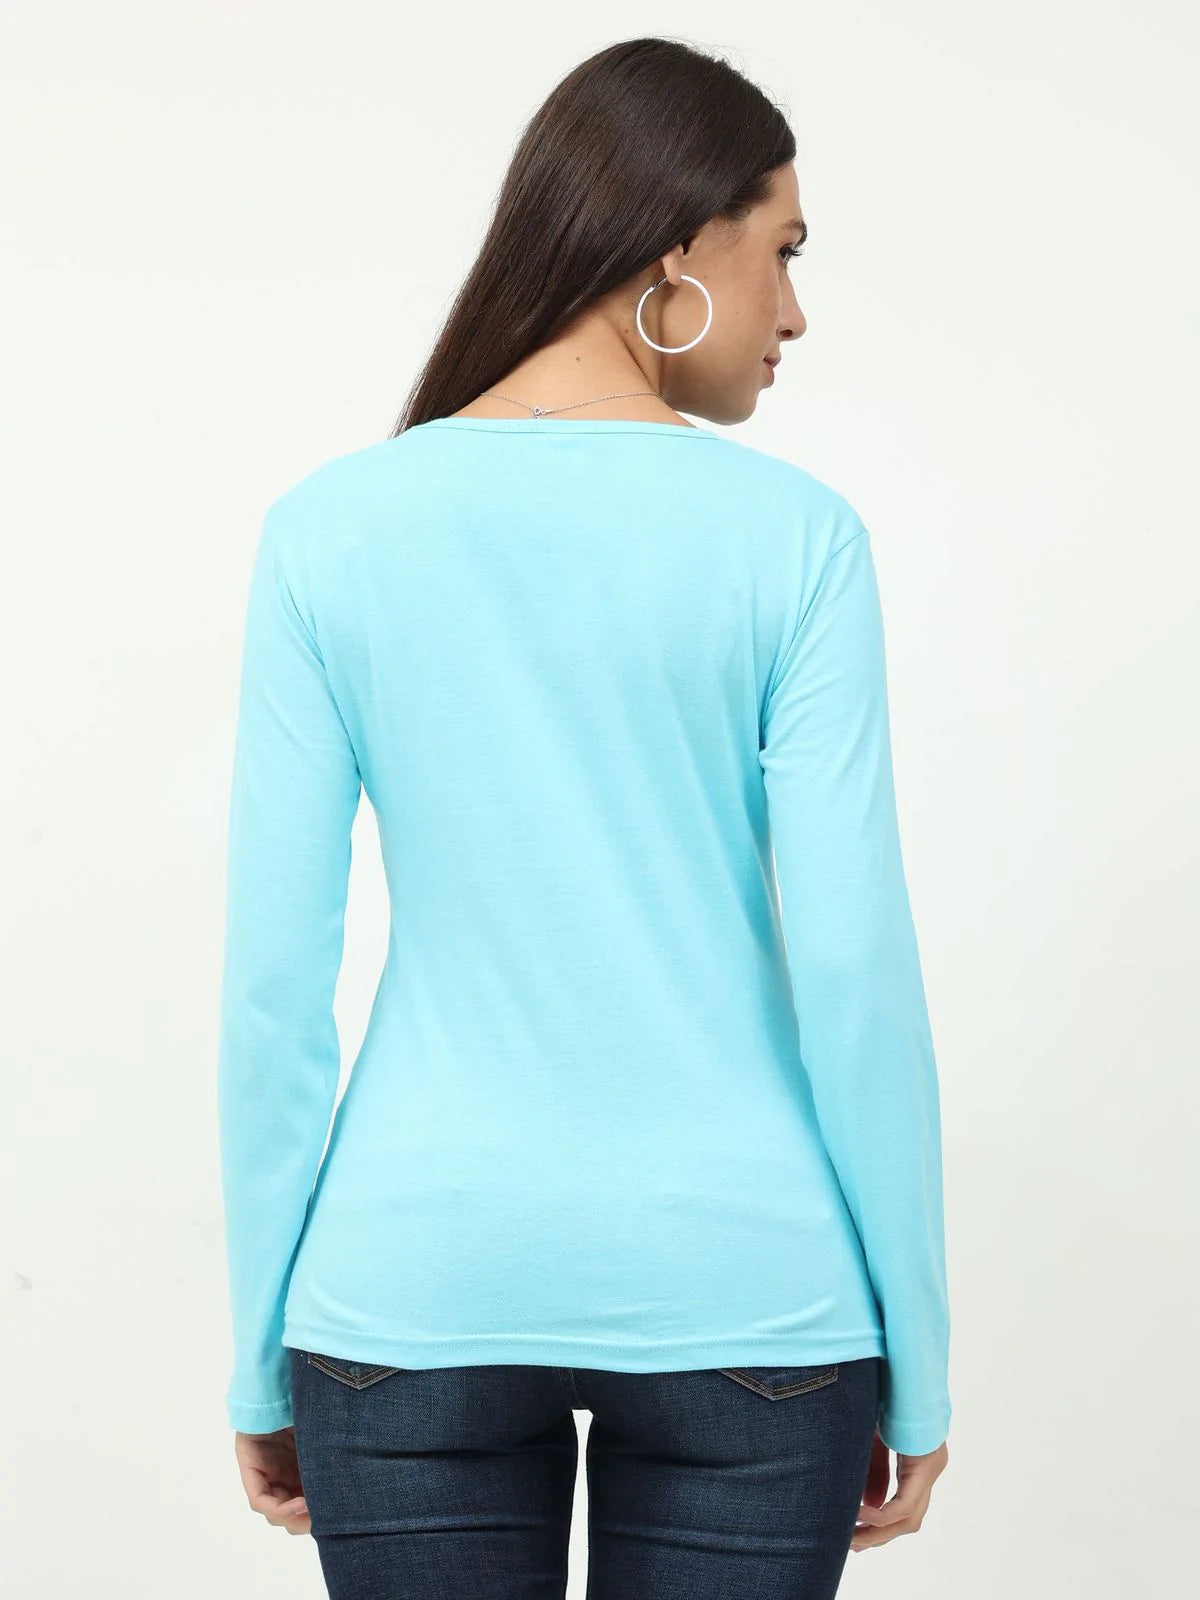 Ladies Cotton Round Neck T Shirt, Size: XL-40 at Rs 100/piece in